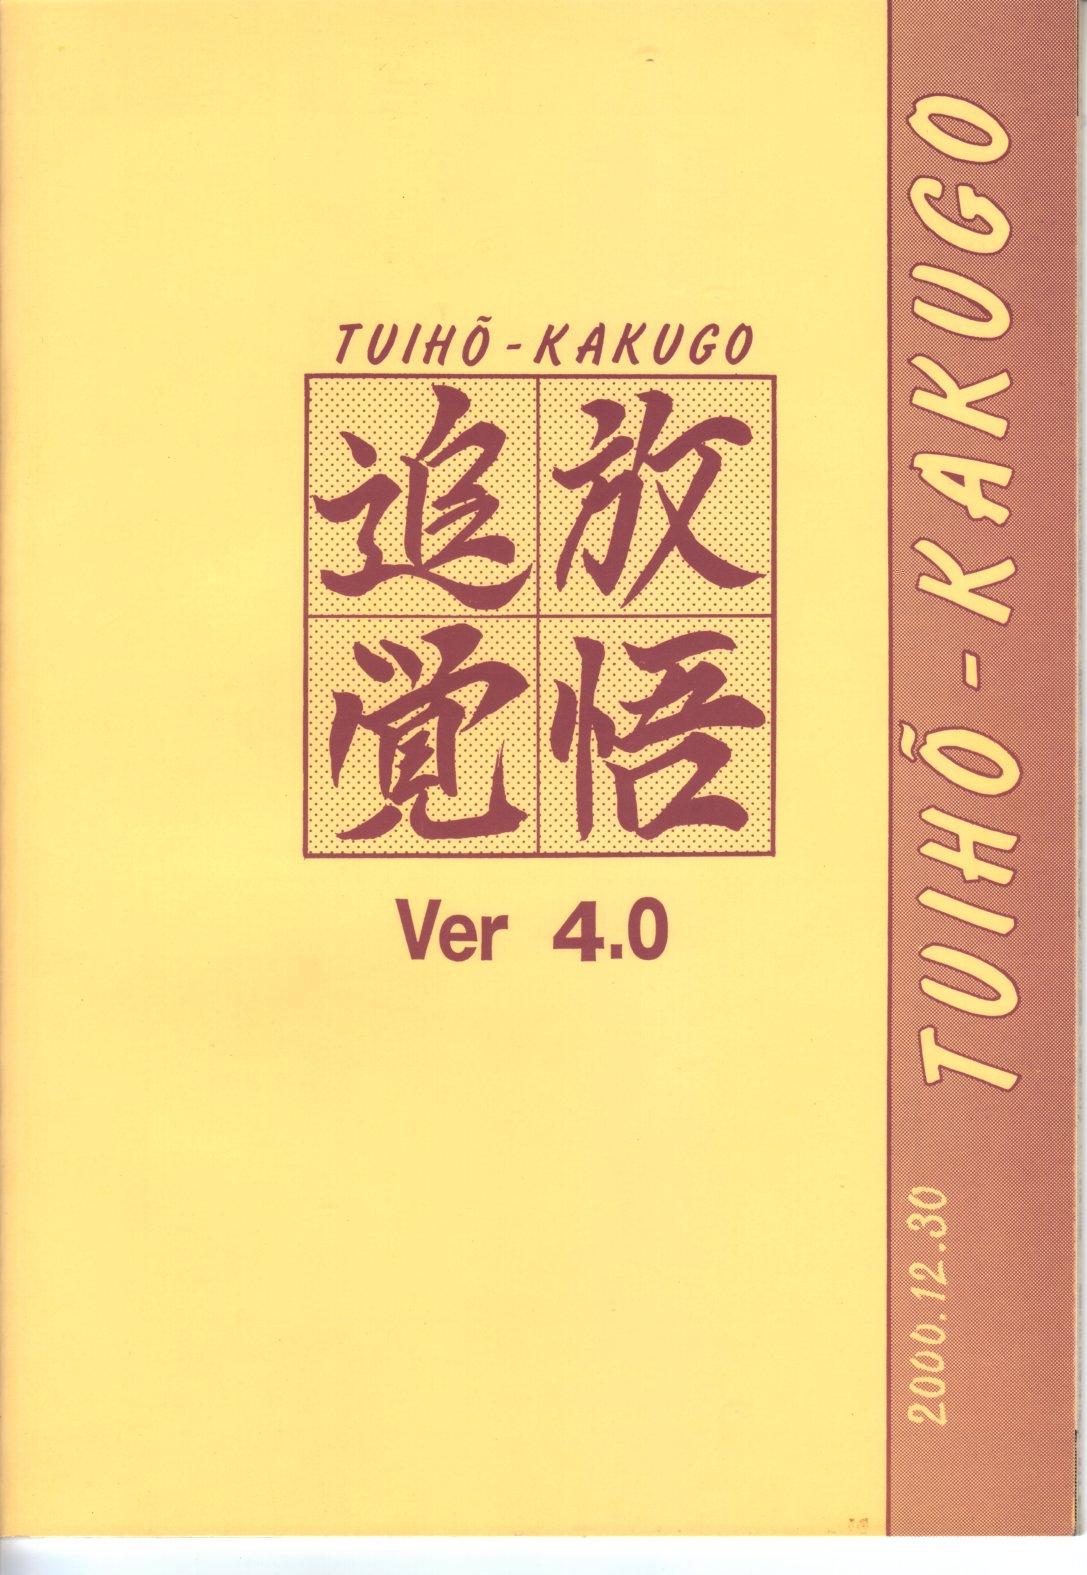 TUIHOU-KAKUGO Ver 4.0 42